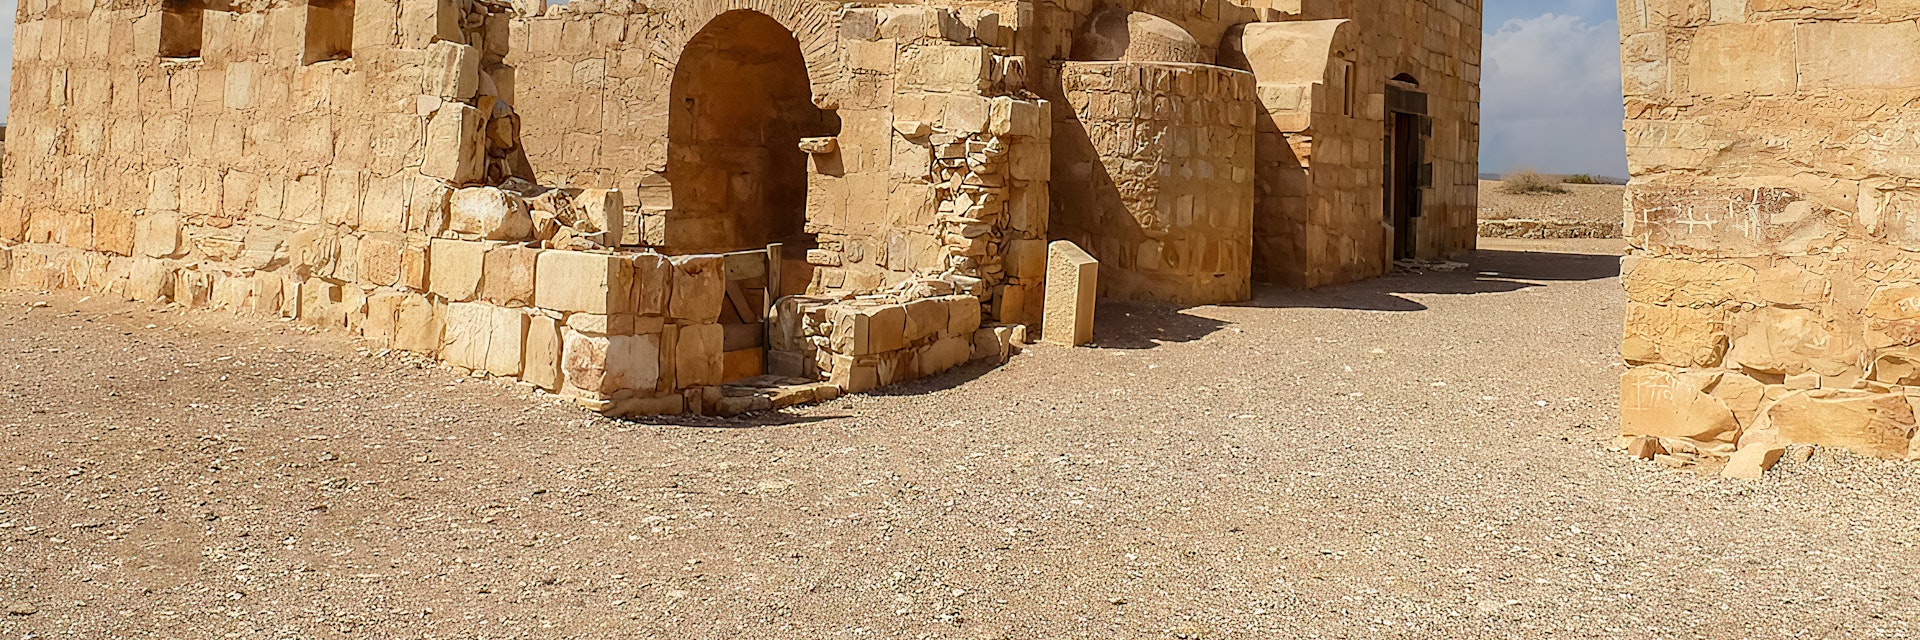 Qusayr 'Amra in eastern Jordan.